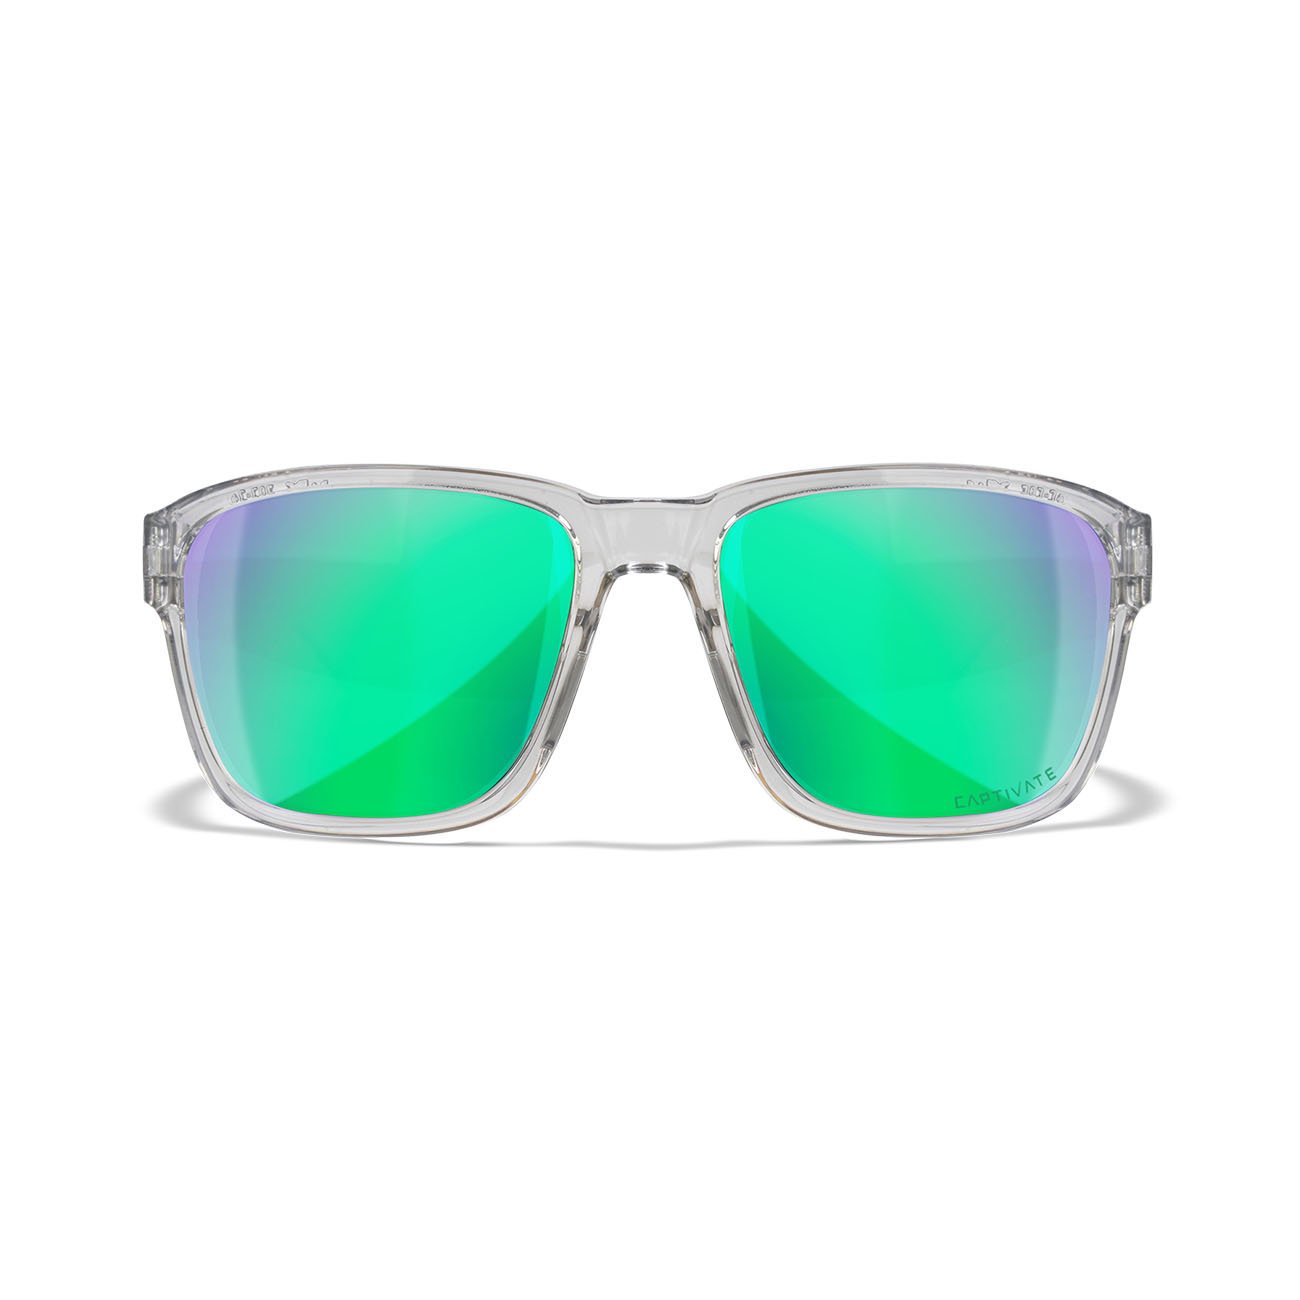 Wiley-X-TREK-Captivate-Polarized-Green-Mirror-Amber-Gloss-Crystal-Light-Grey-Frame-CarpStore.pl-Europe-Online-Carp-Shop-4